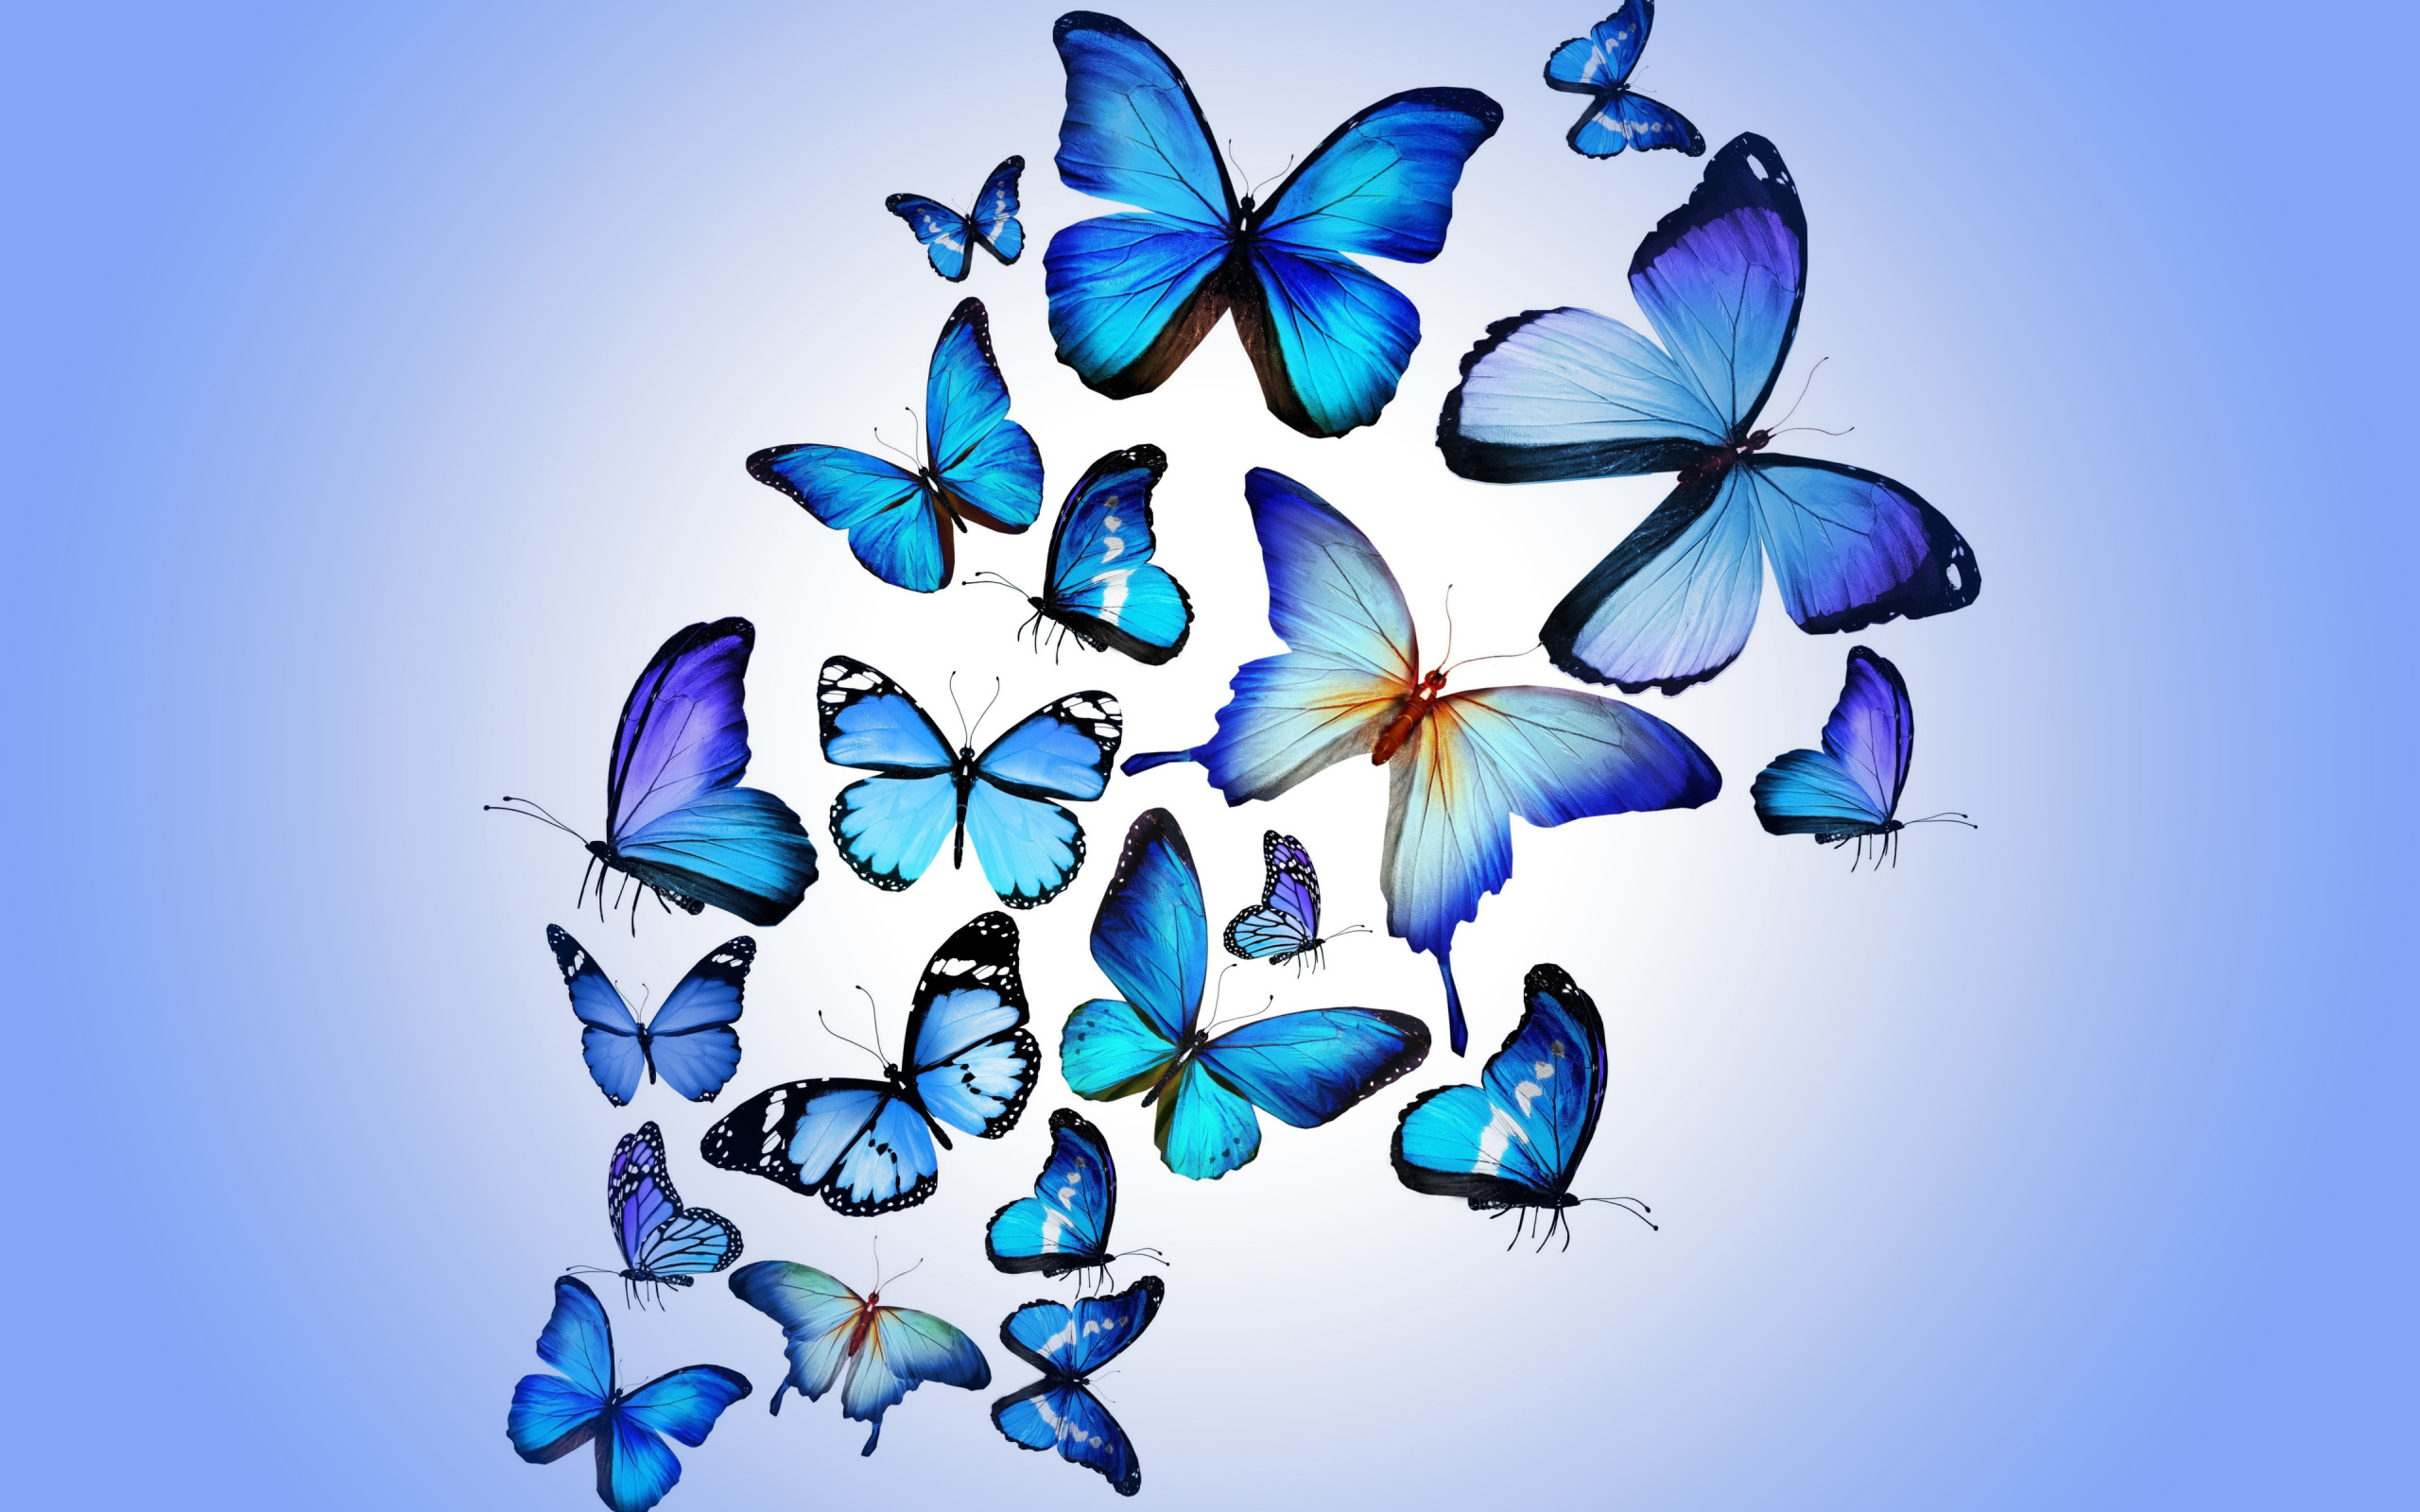 A lot of blue butterflies on a blue background